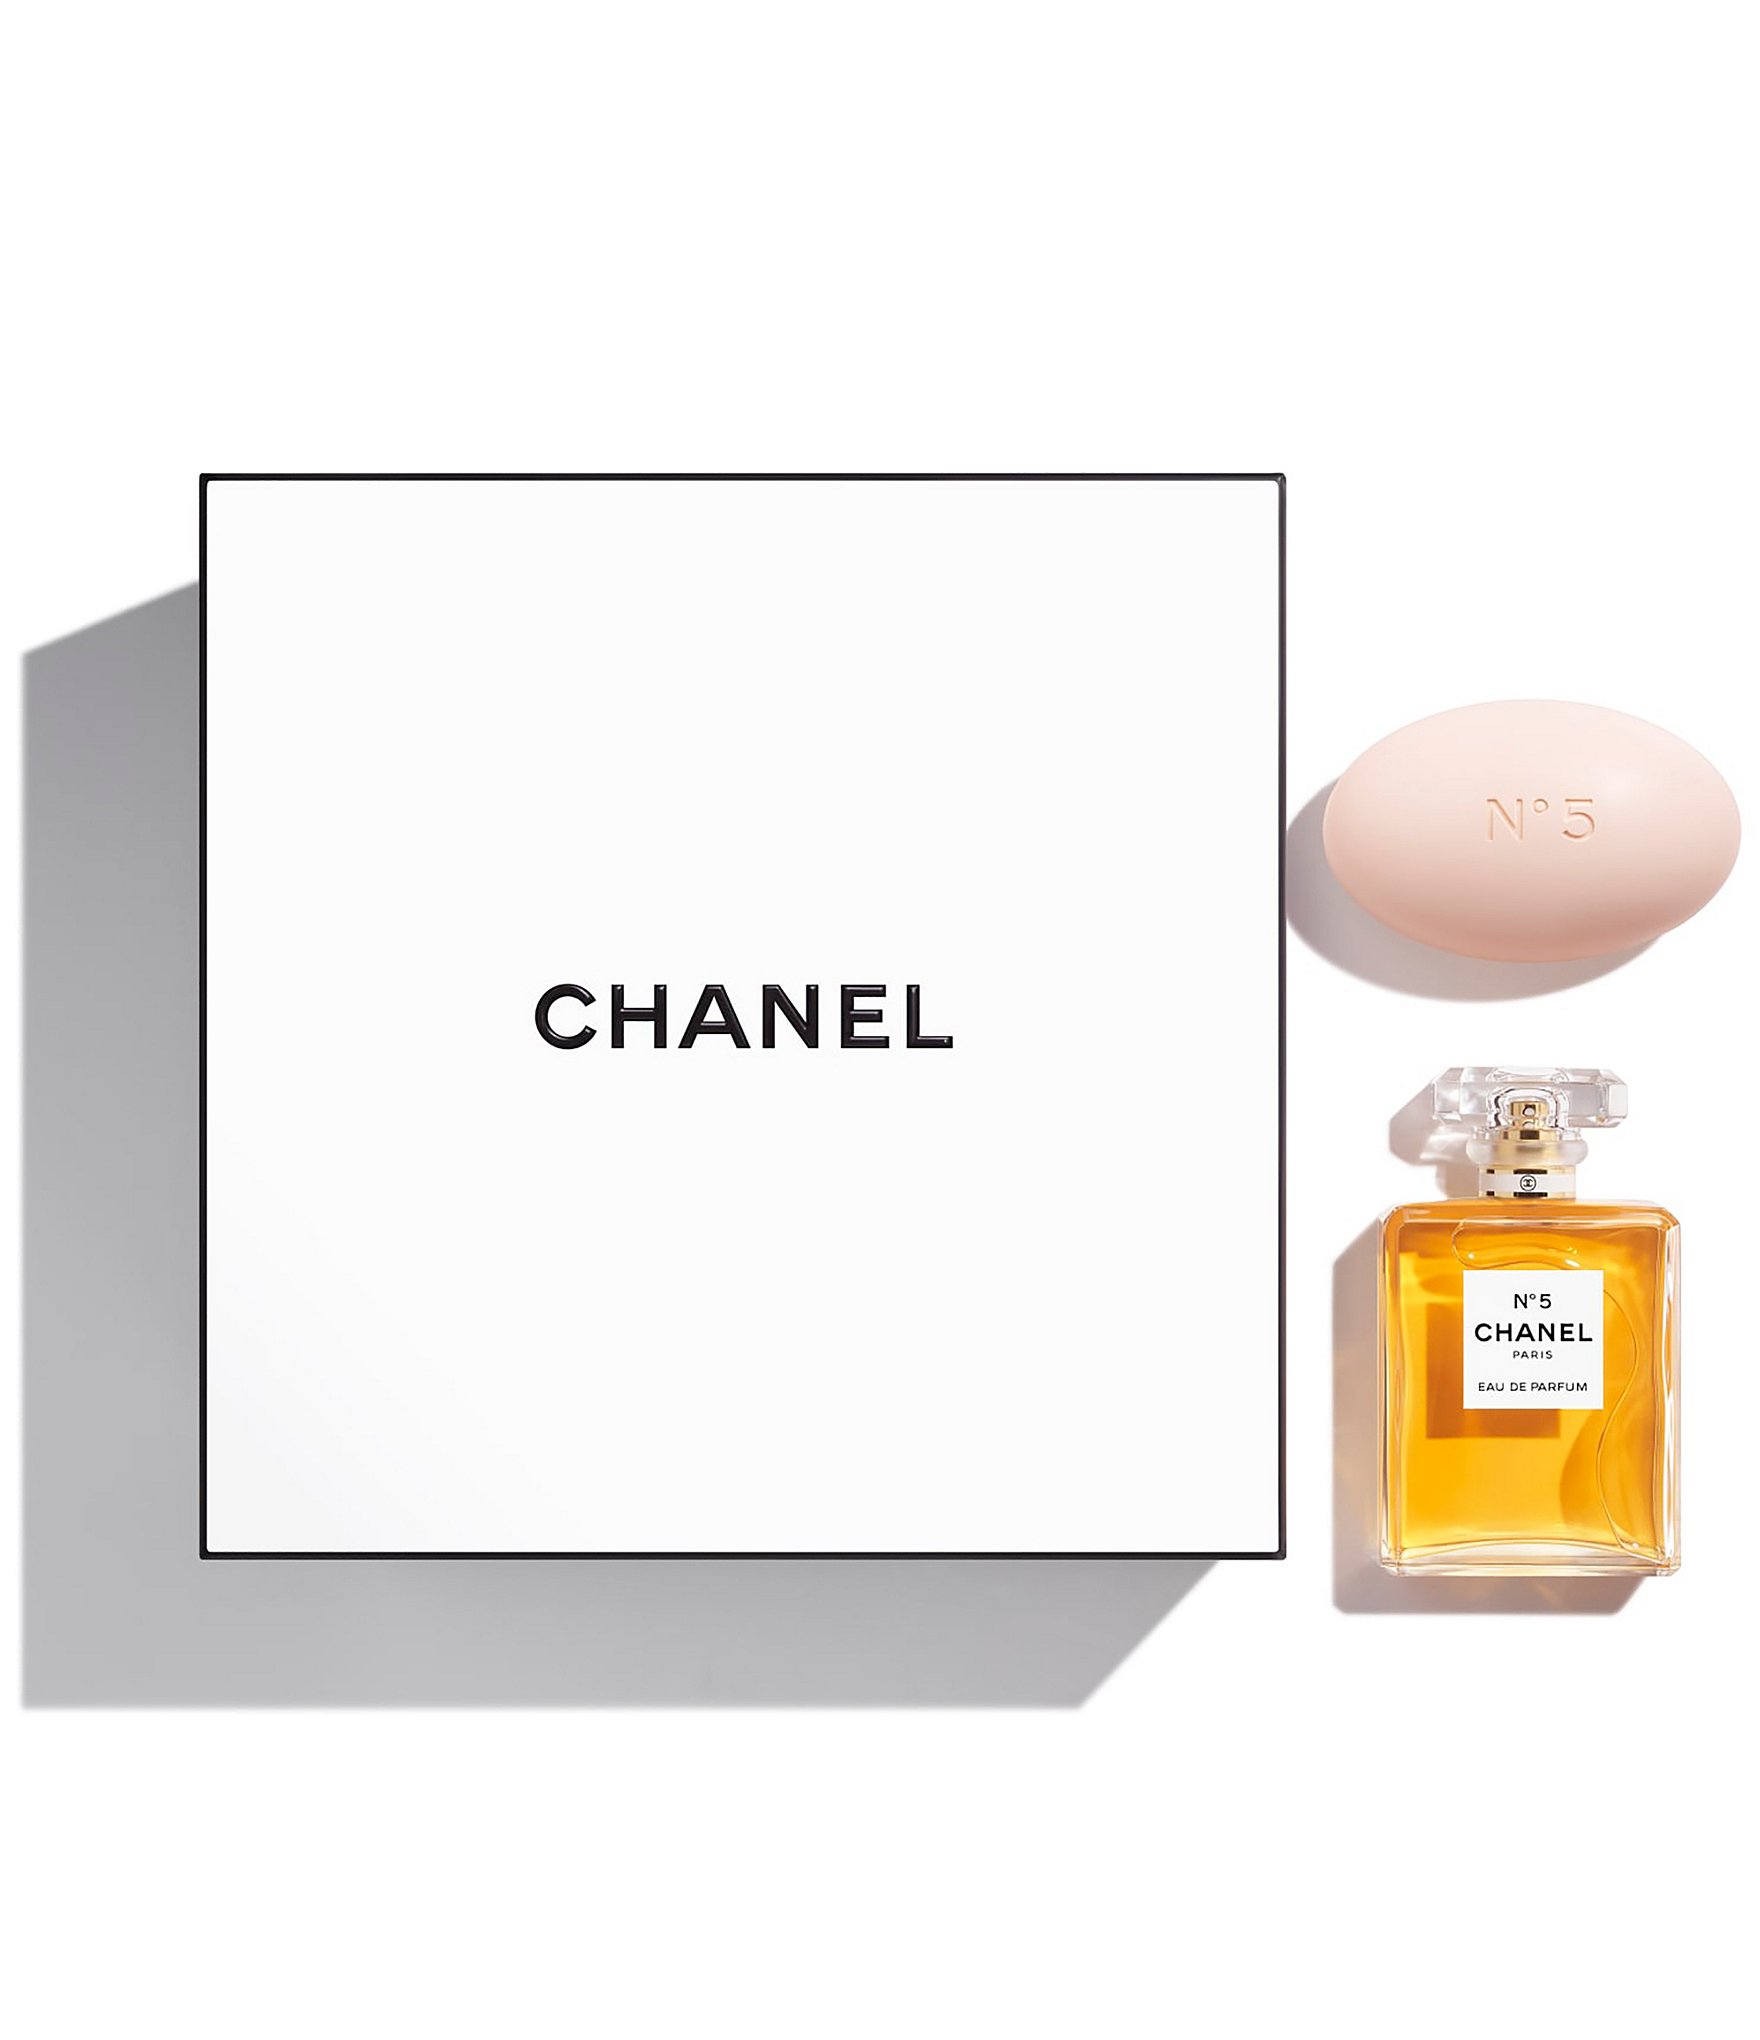 chanel gift set perfume